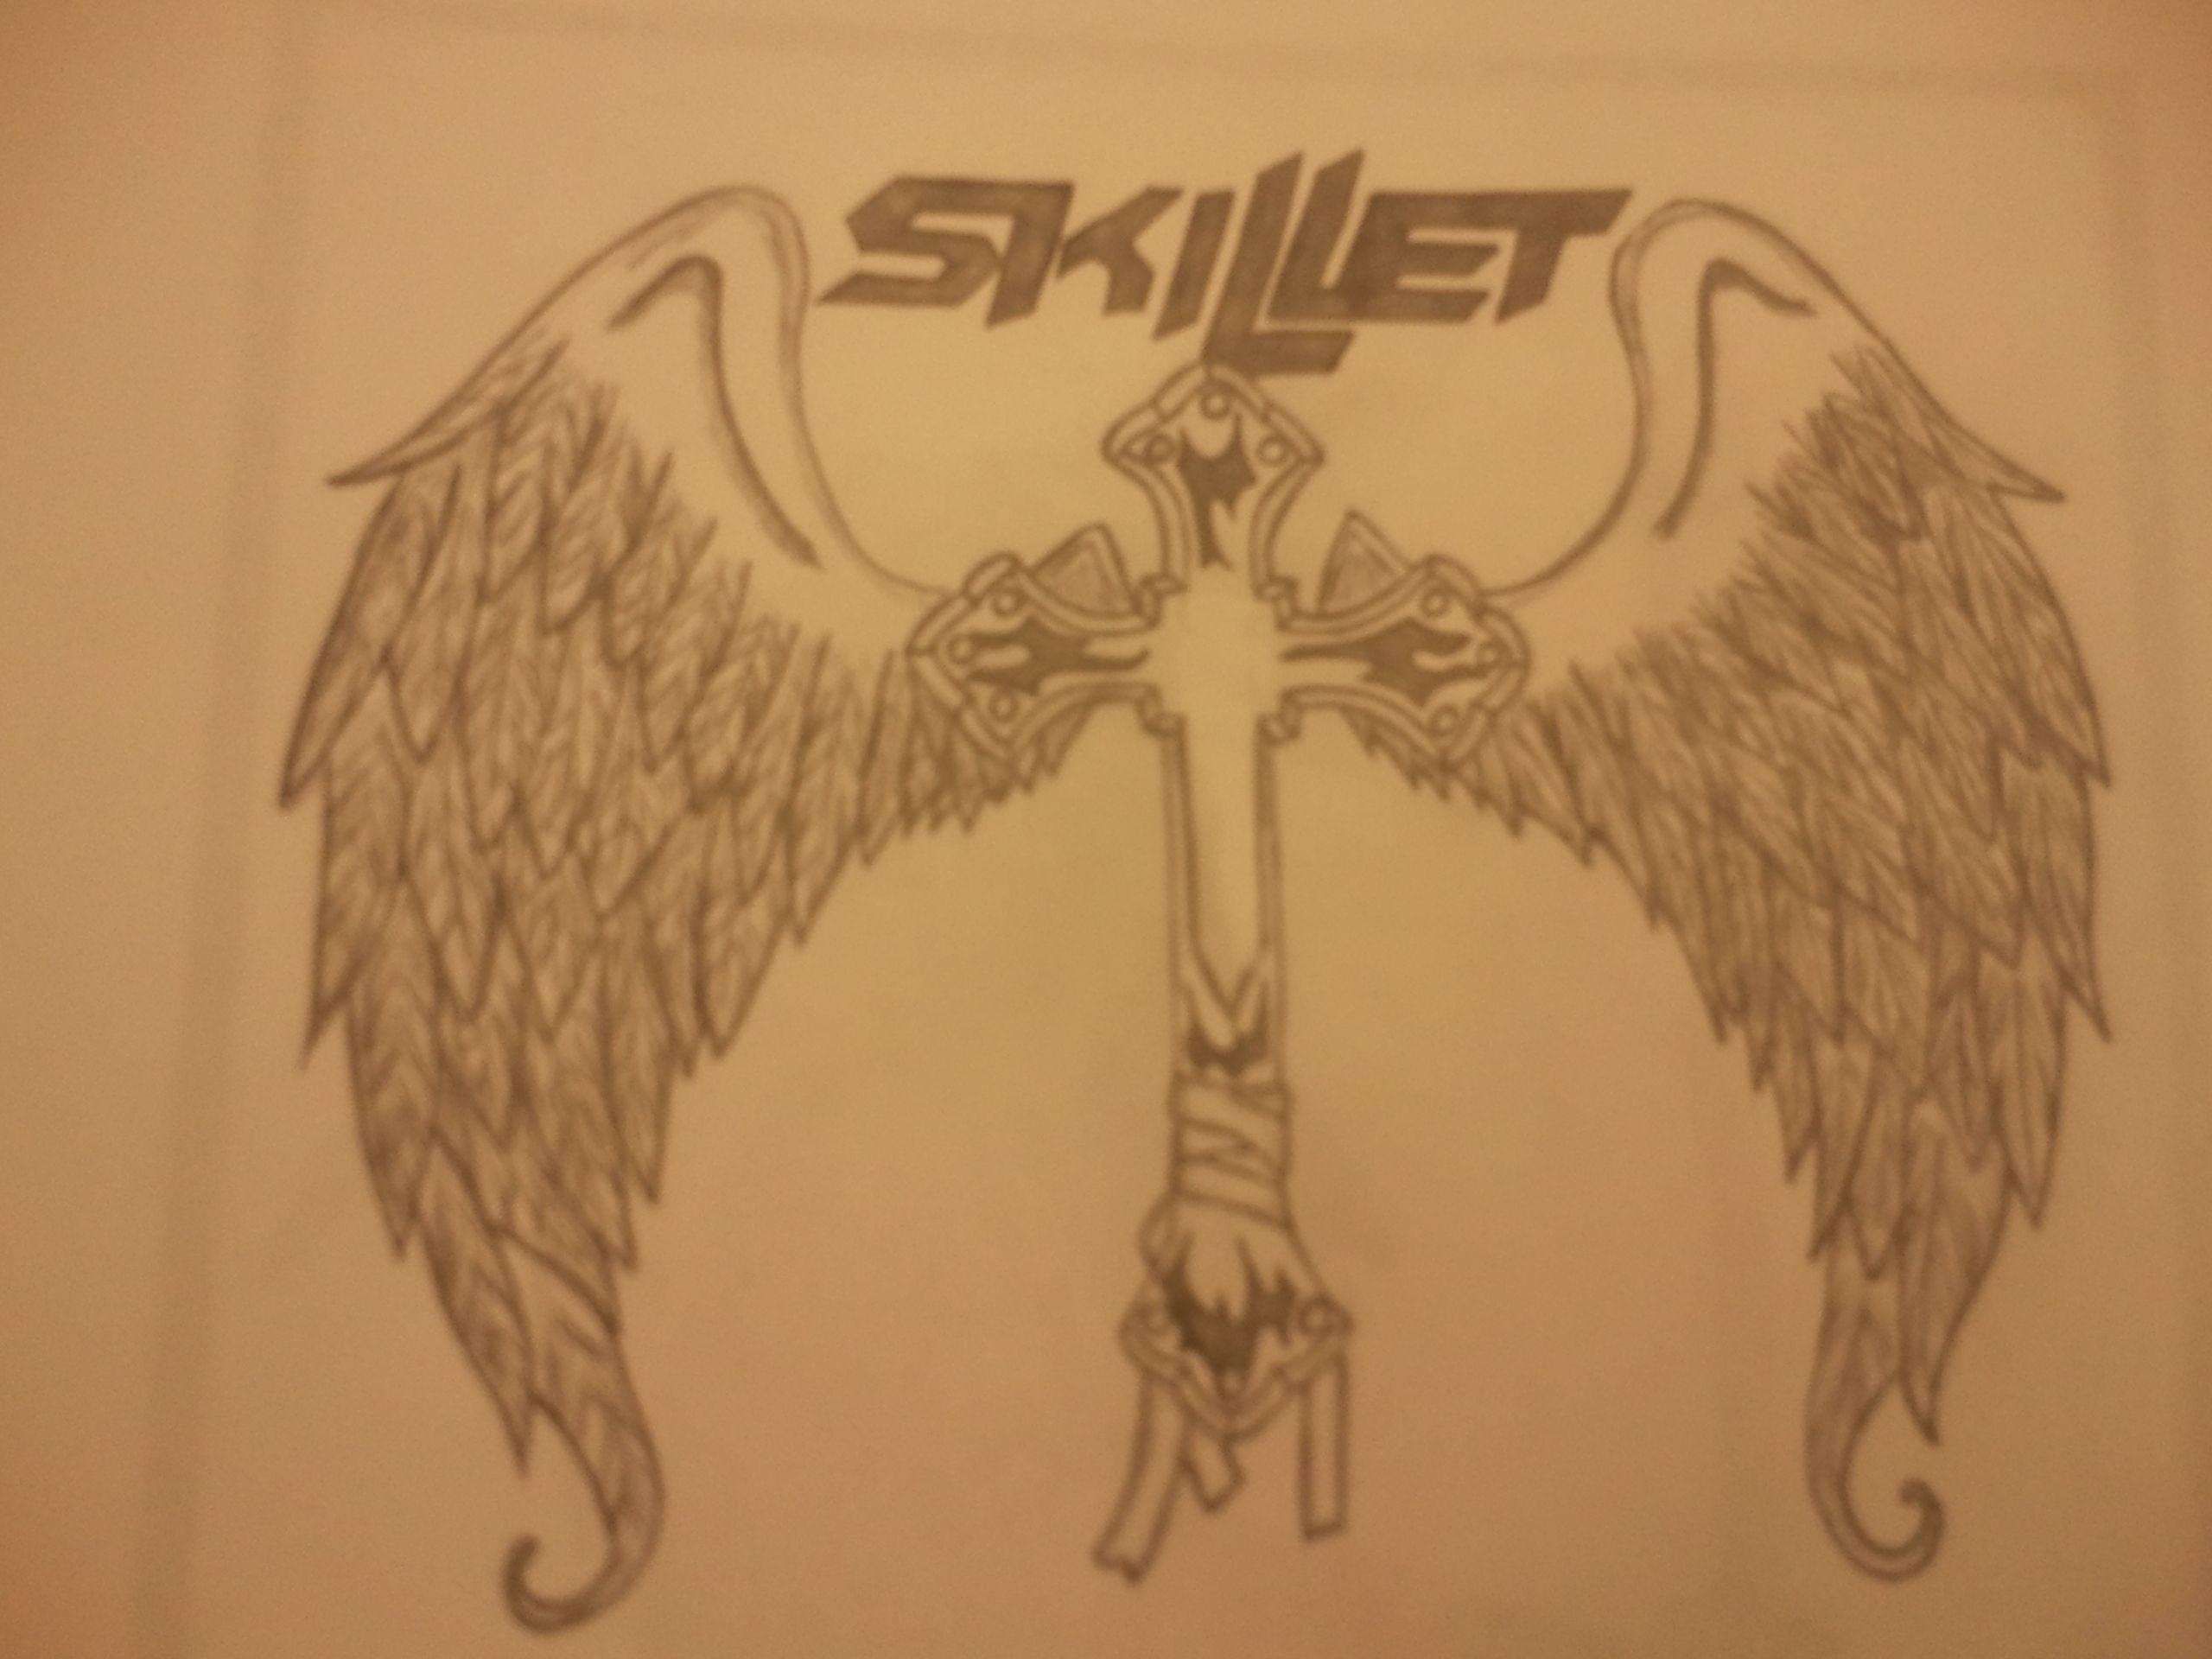 Skillet Logo - My Version of a New Skillet logo